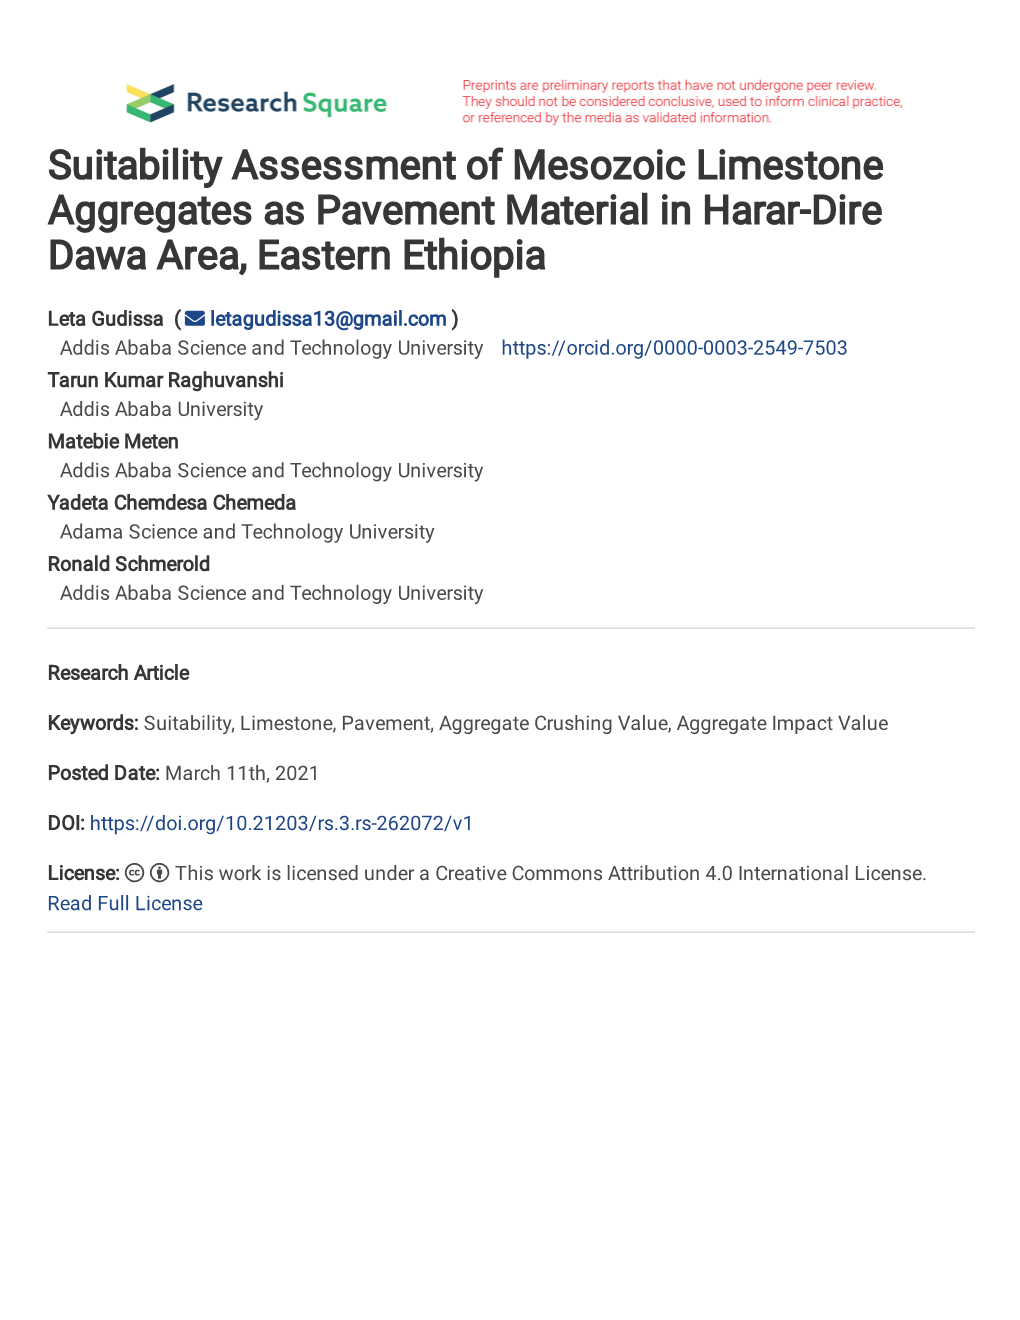 Suitability Assessment of Mesozoic Limestone Aggregates As Pavement Material in Harar-Dire Dawa Area, Eastern Ethiopia